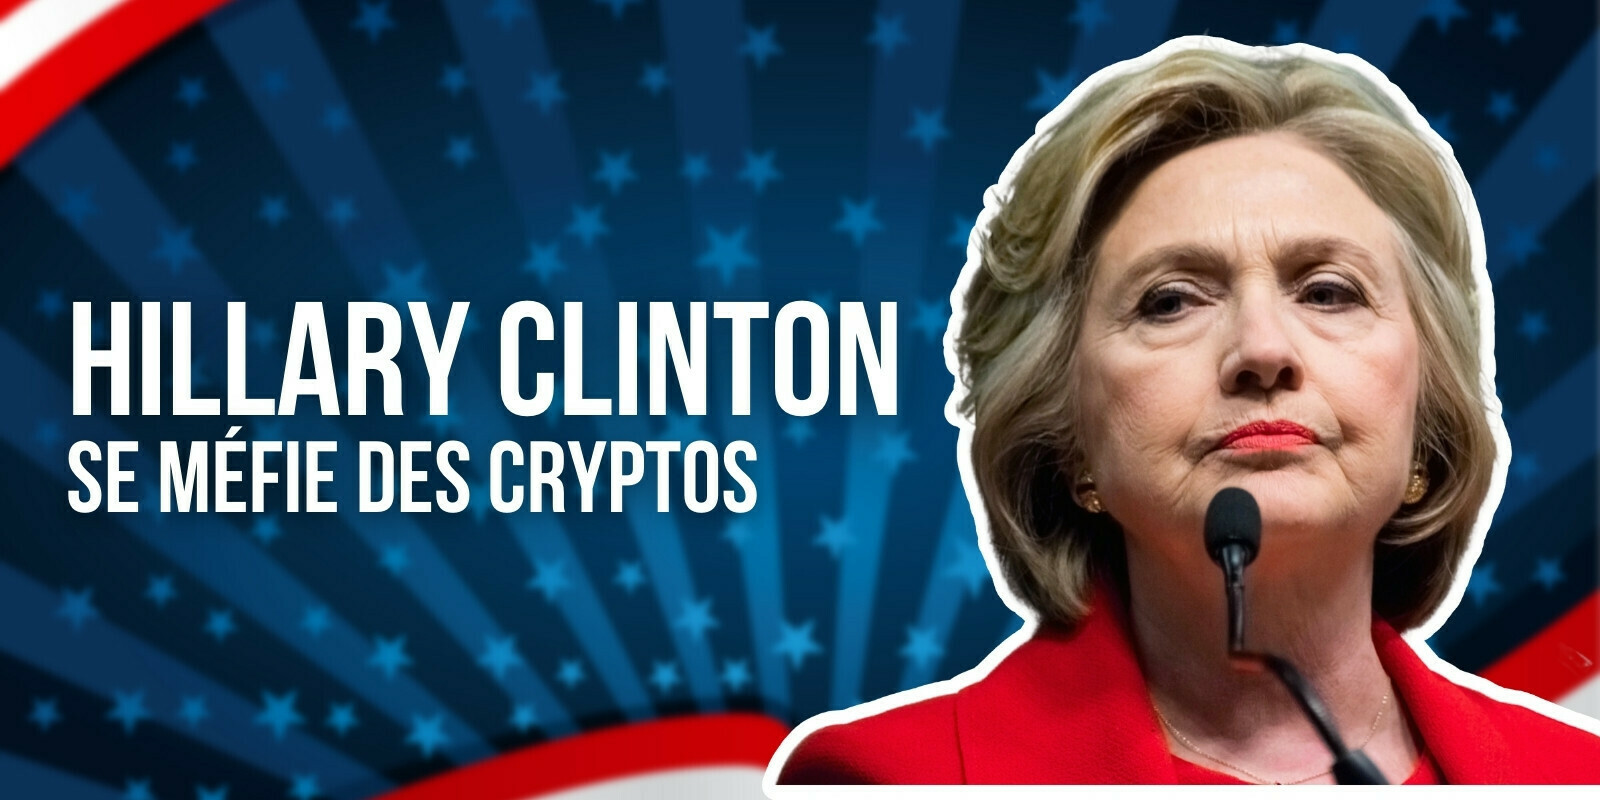 Hillary Clinton : « Les cryptomonnaies peuvent affaiblir le dollar et déstabiliser des nations »